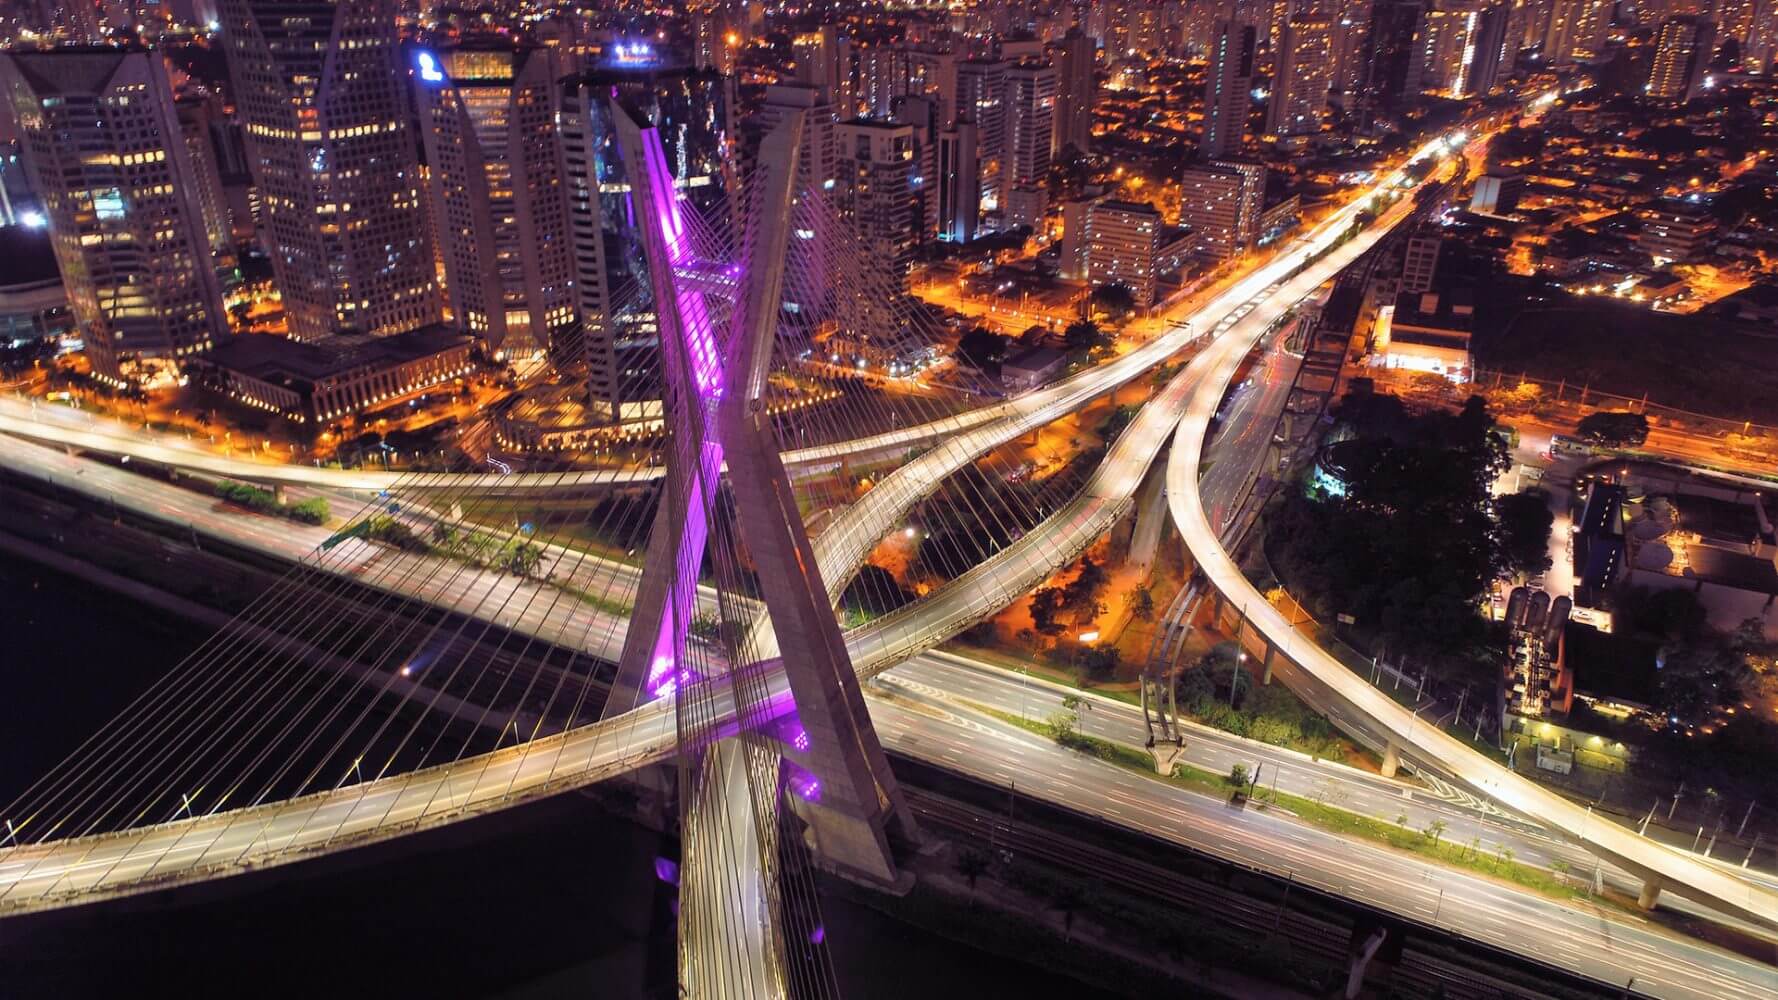 Estaiada's bridge night aerial view. São Paulo, Brazil. Business center. Financial Center. Great landscape, case for emerging market equities